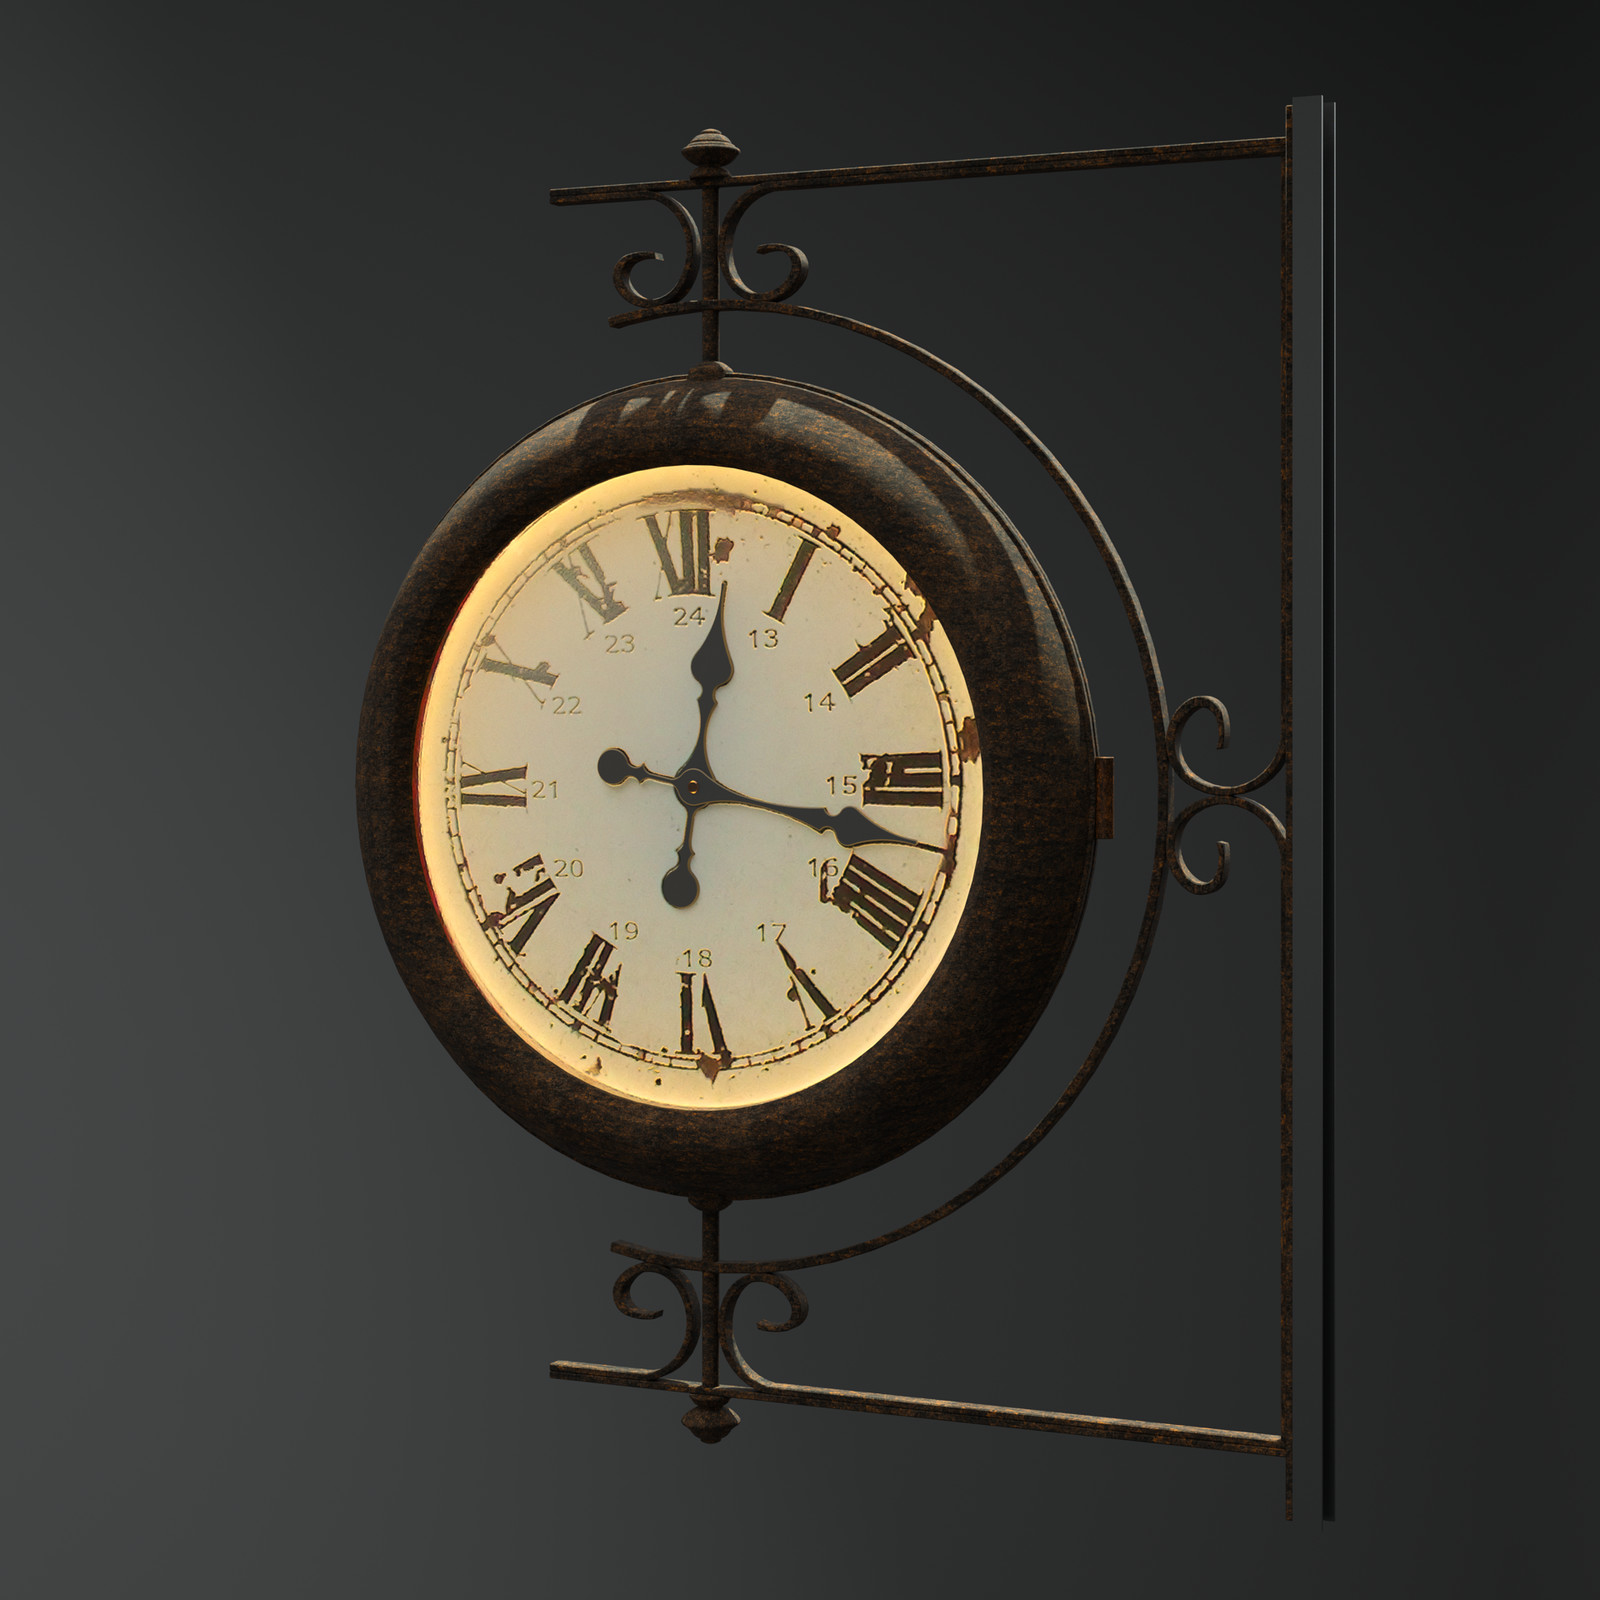 SketchUp + Thea Render 
Rivendell Mill's Wall Clock
Rivendell Clock final-Scene 8A